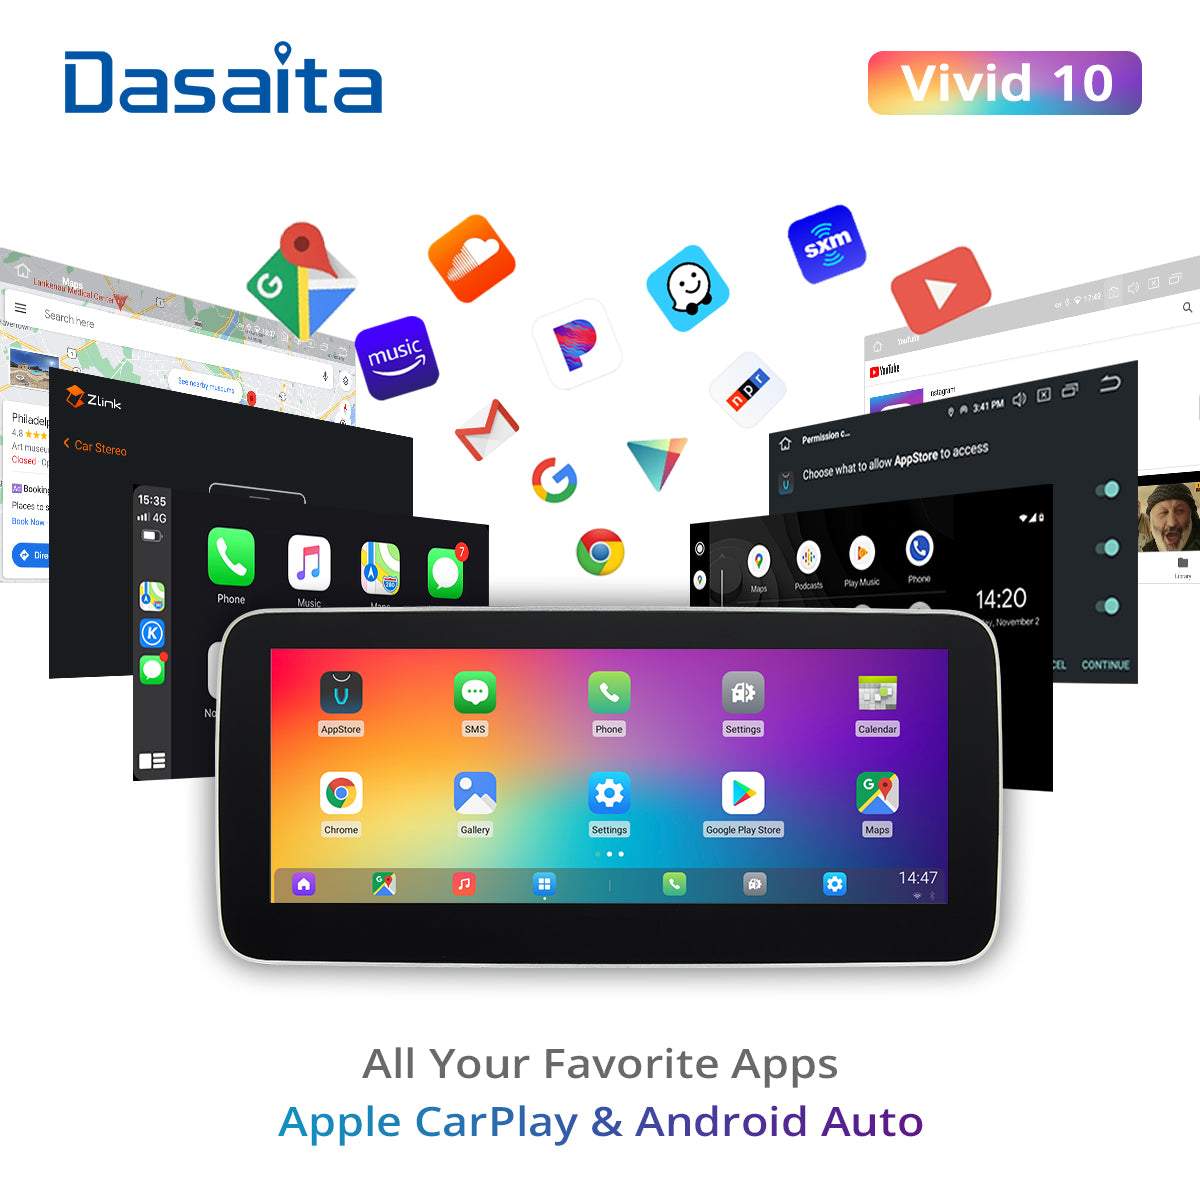 Dasaita Vivid10 Universal Single Din Car Stereo 10.25 Inch Carplay Android Auto PX6 4G+64G Android10 1280*480 DSP AHD Radio